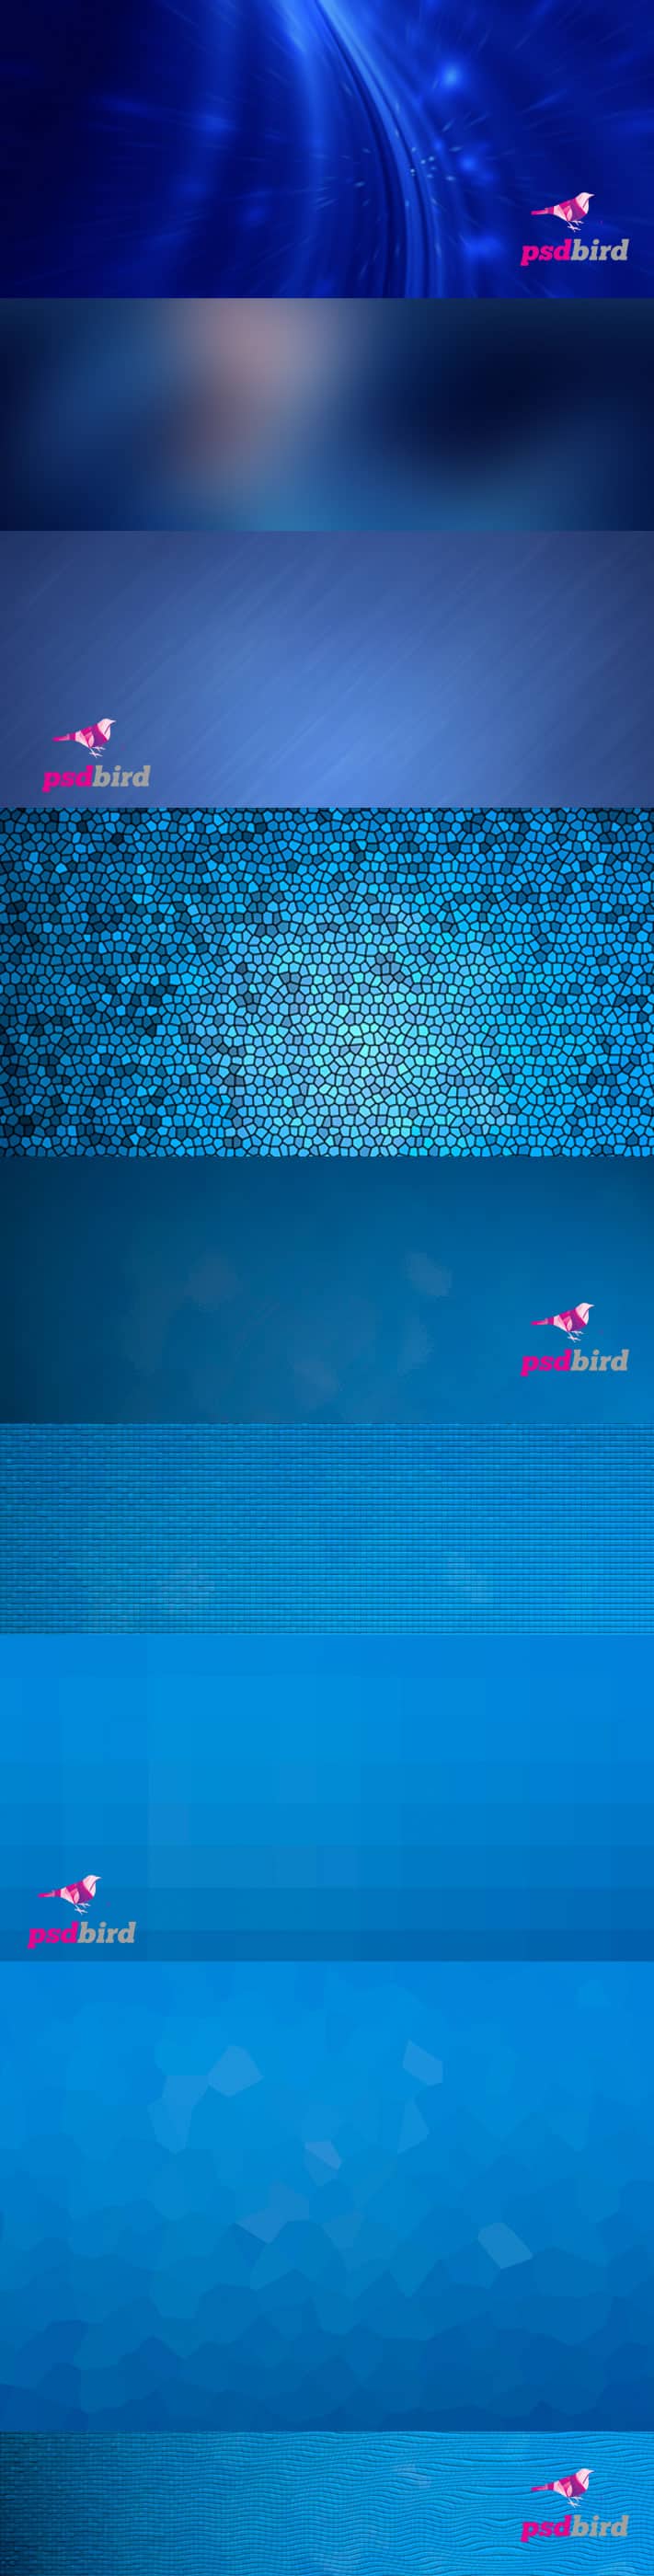 Free-Blue-Web-Background-Wallpaper-Bundle-PSD